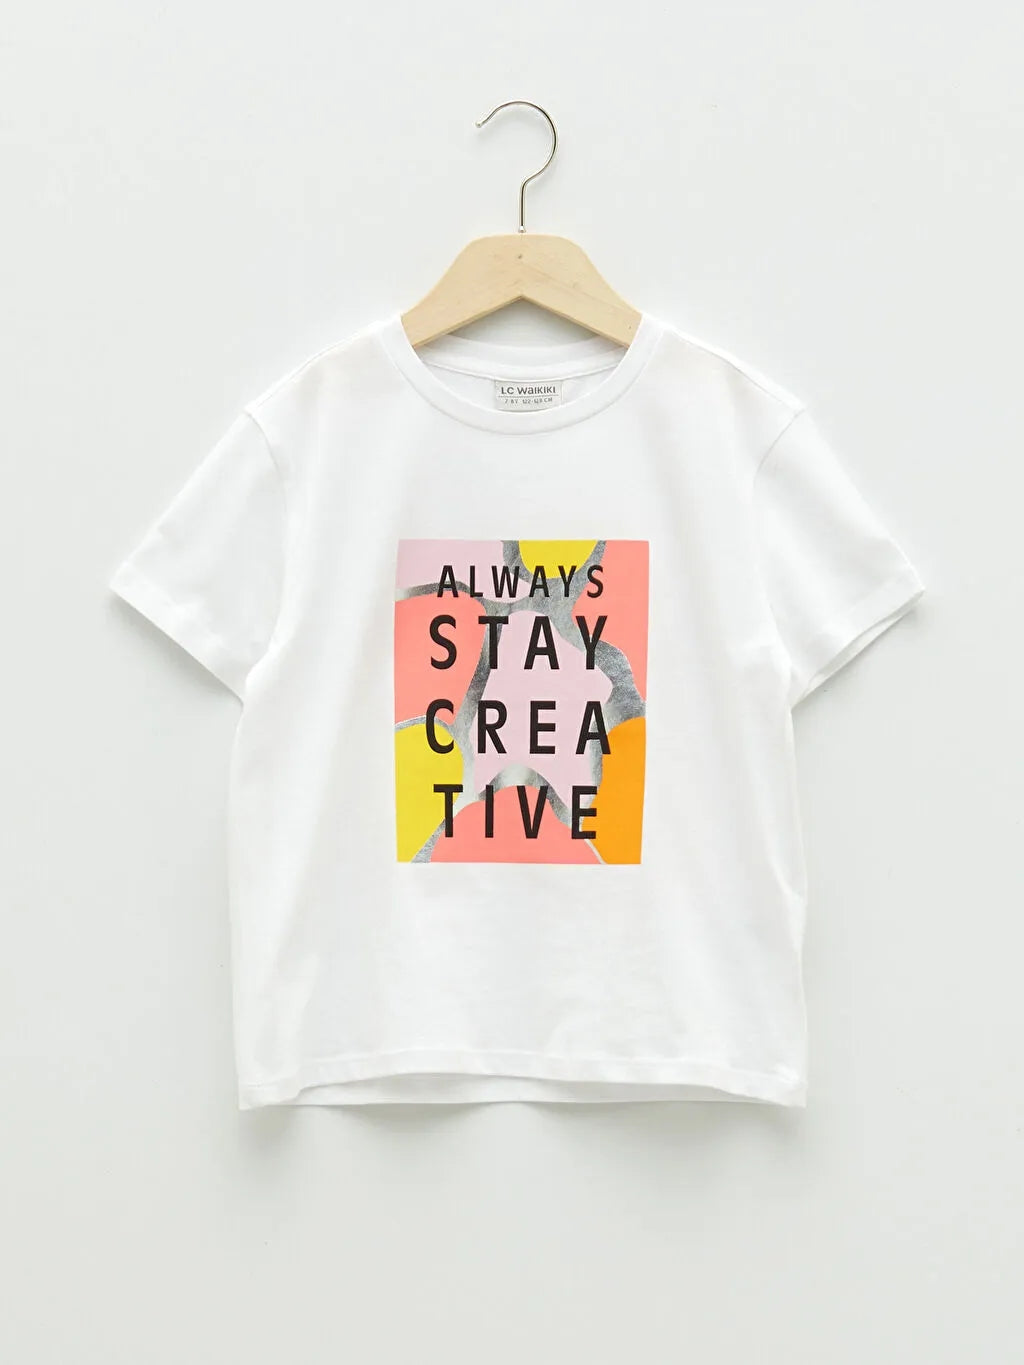 Crew Neck Printed Short Sleeve Girls T-Shirt